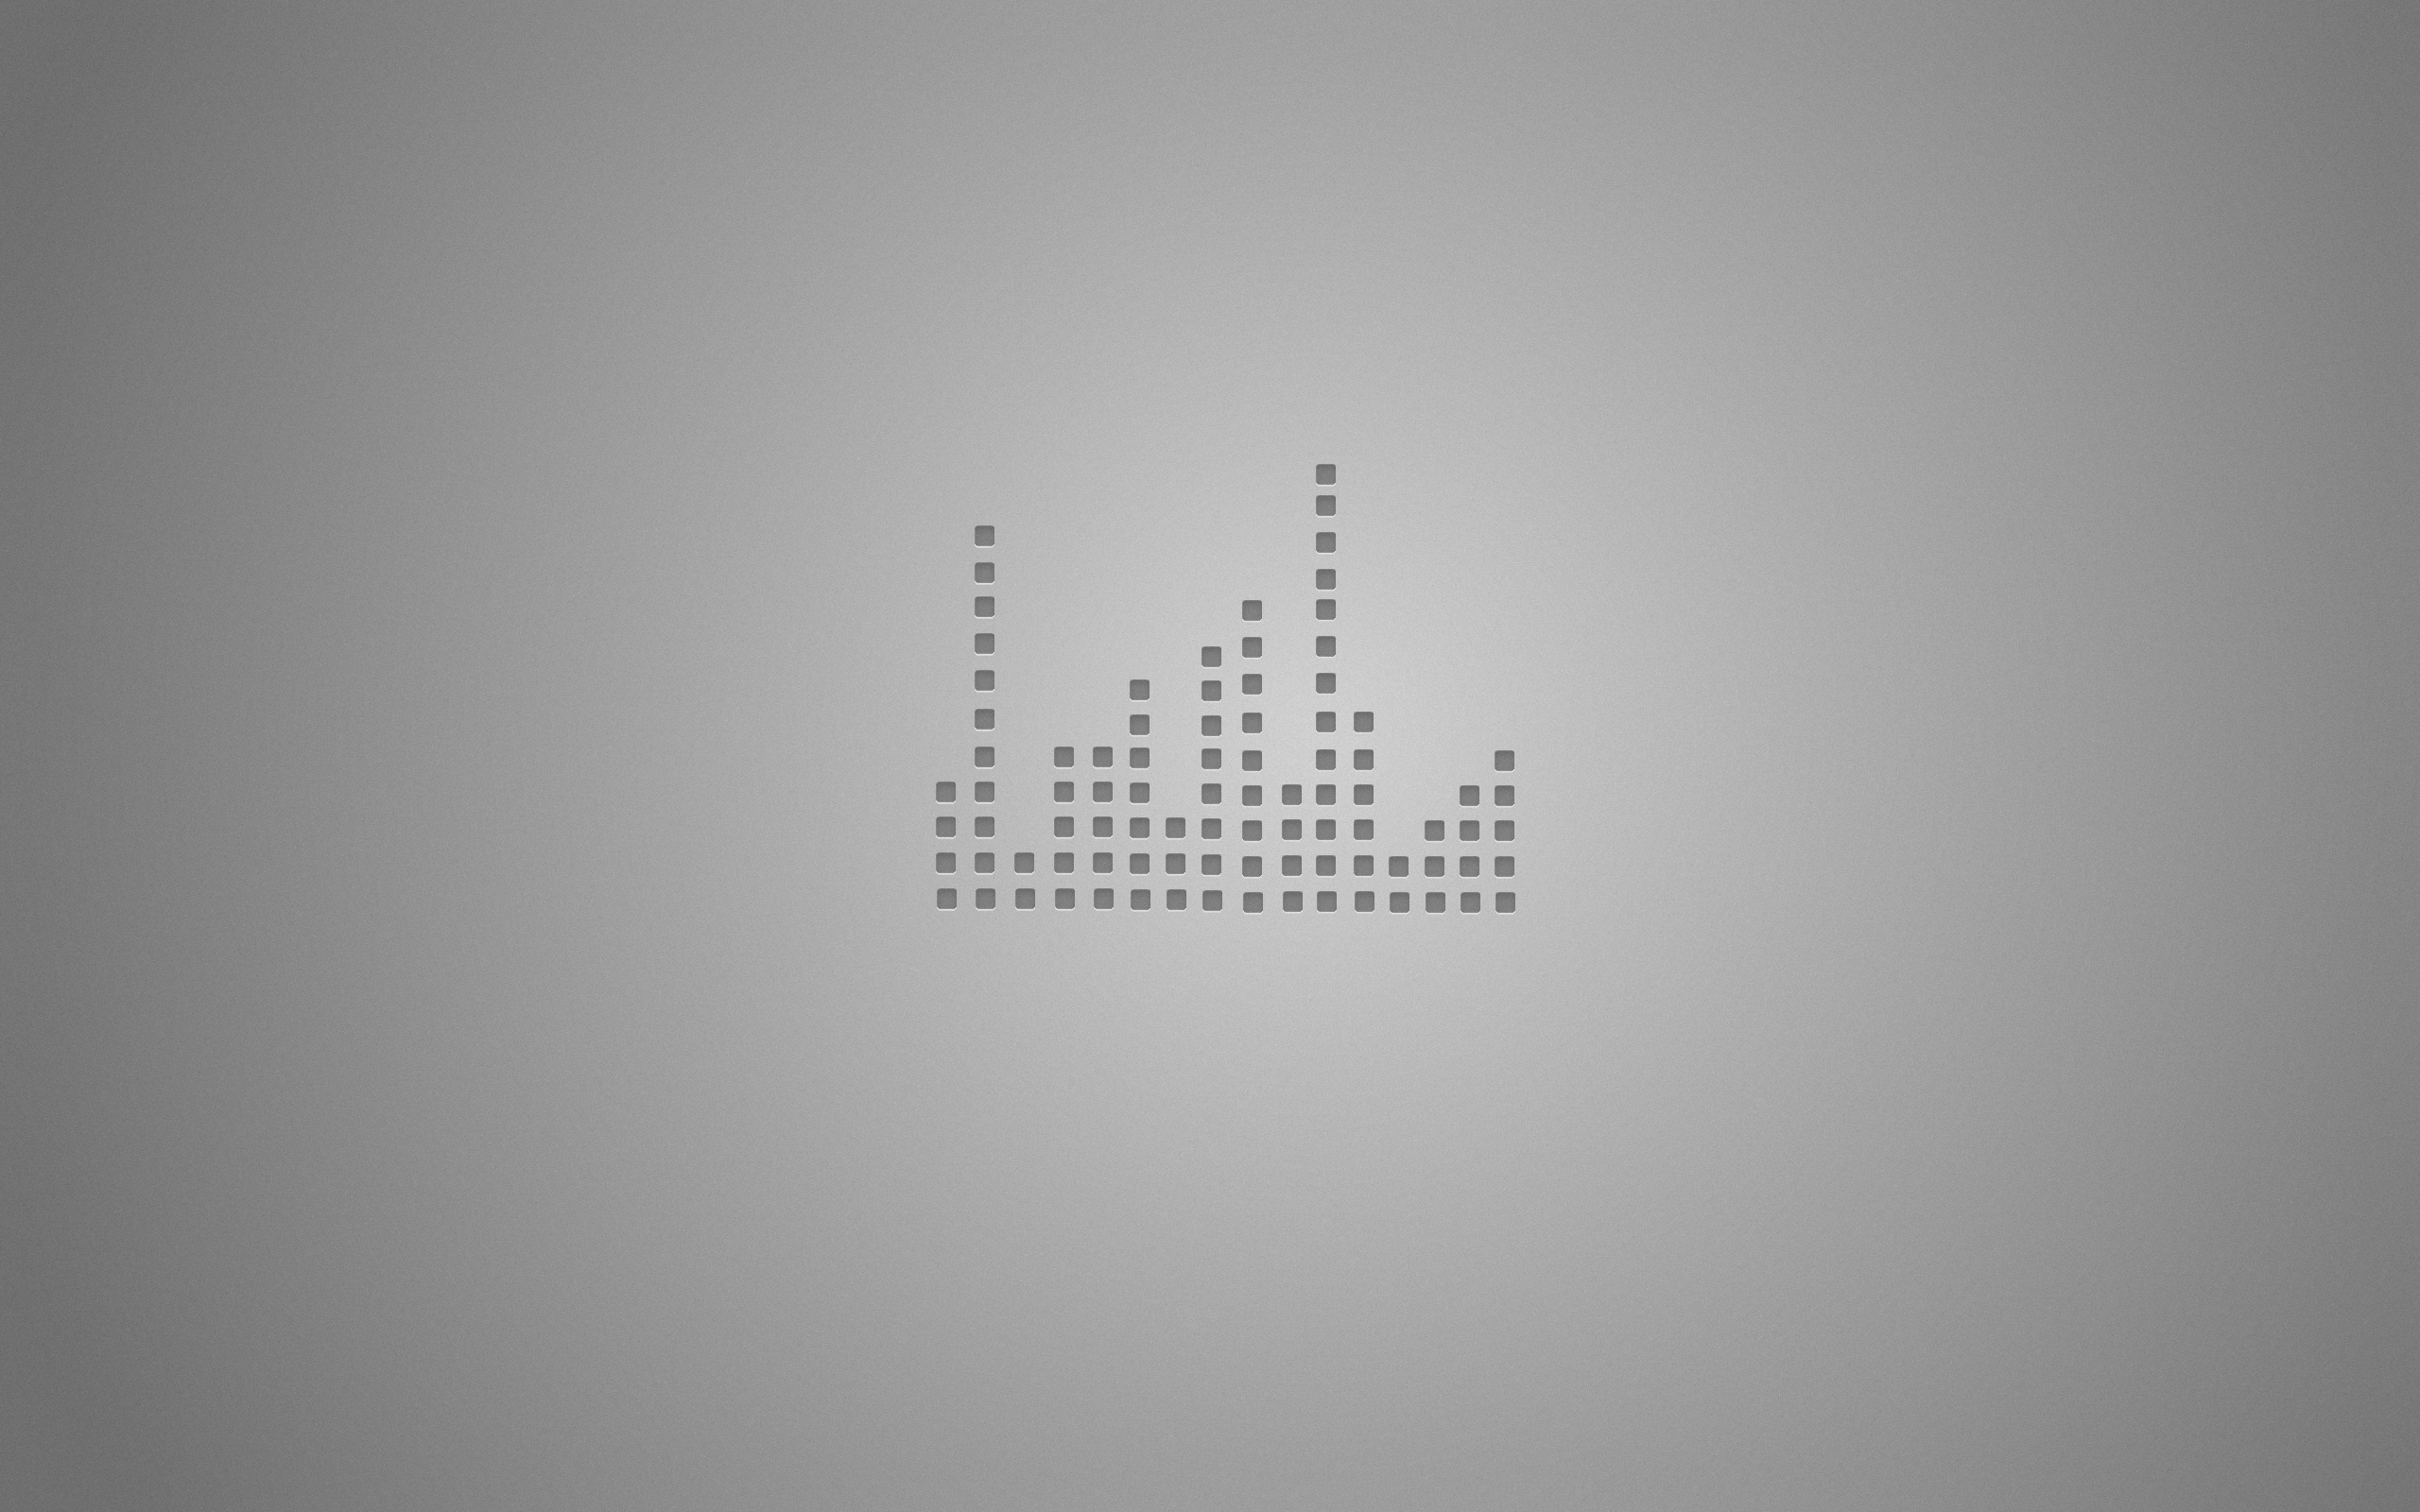 General 2560x1600 dots gray minimalism digital art simple background audio spectrum monochrome